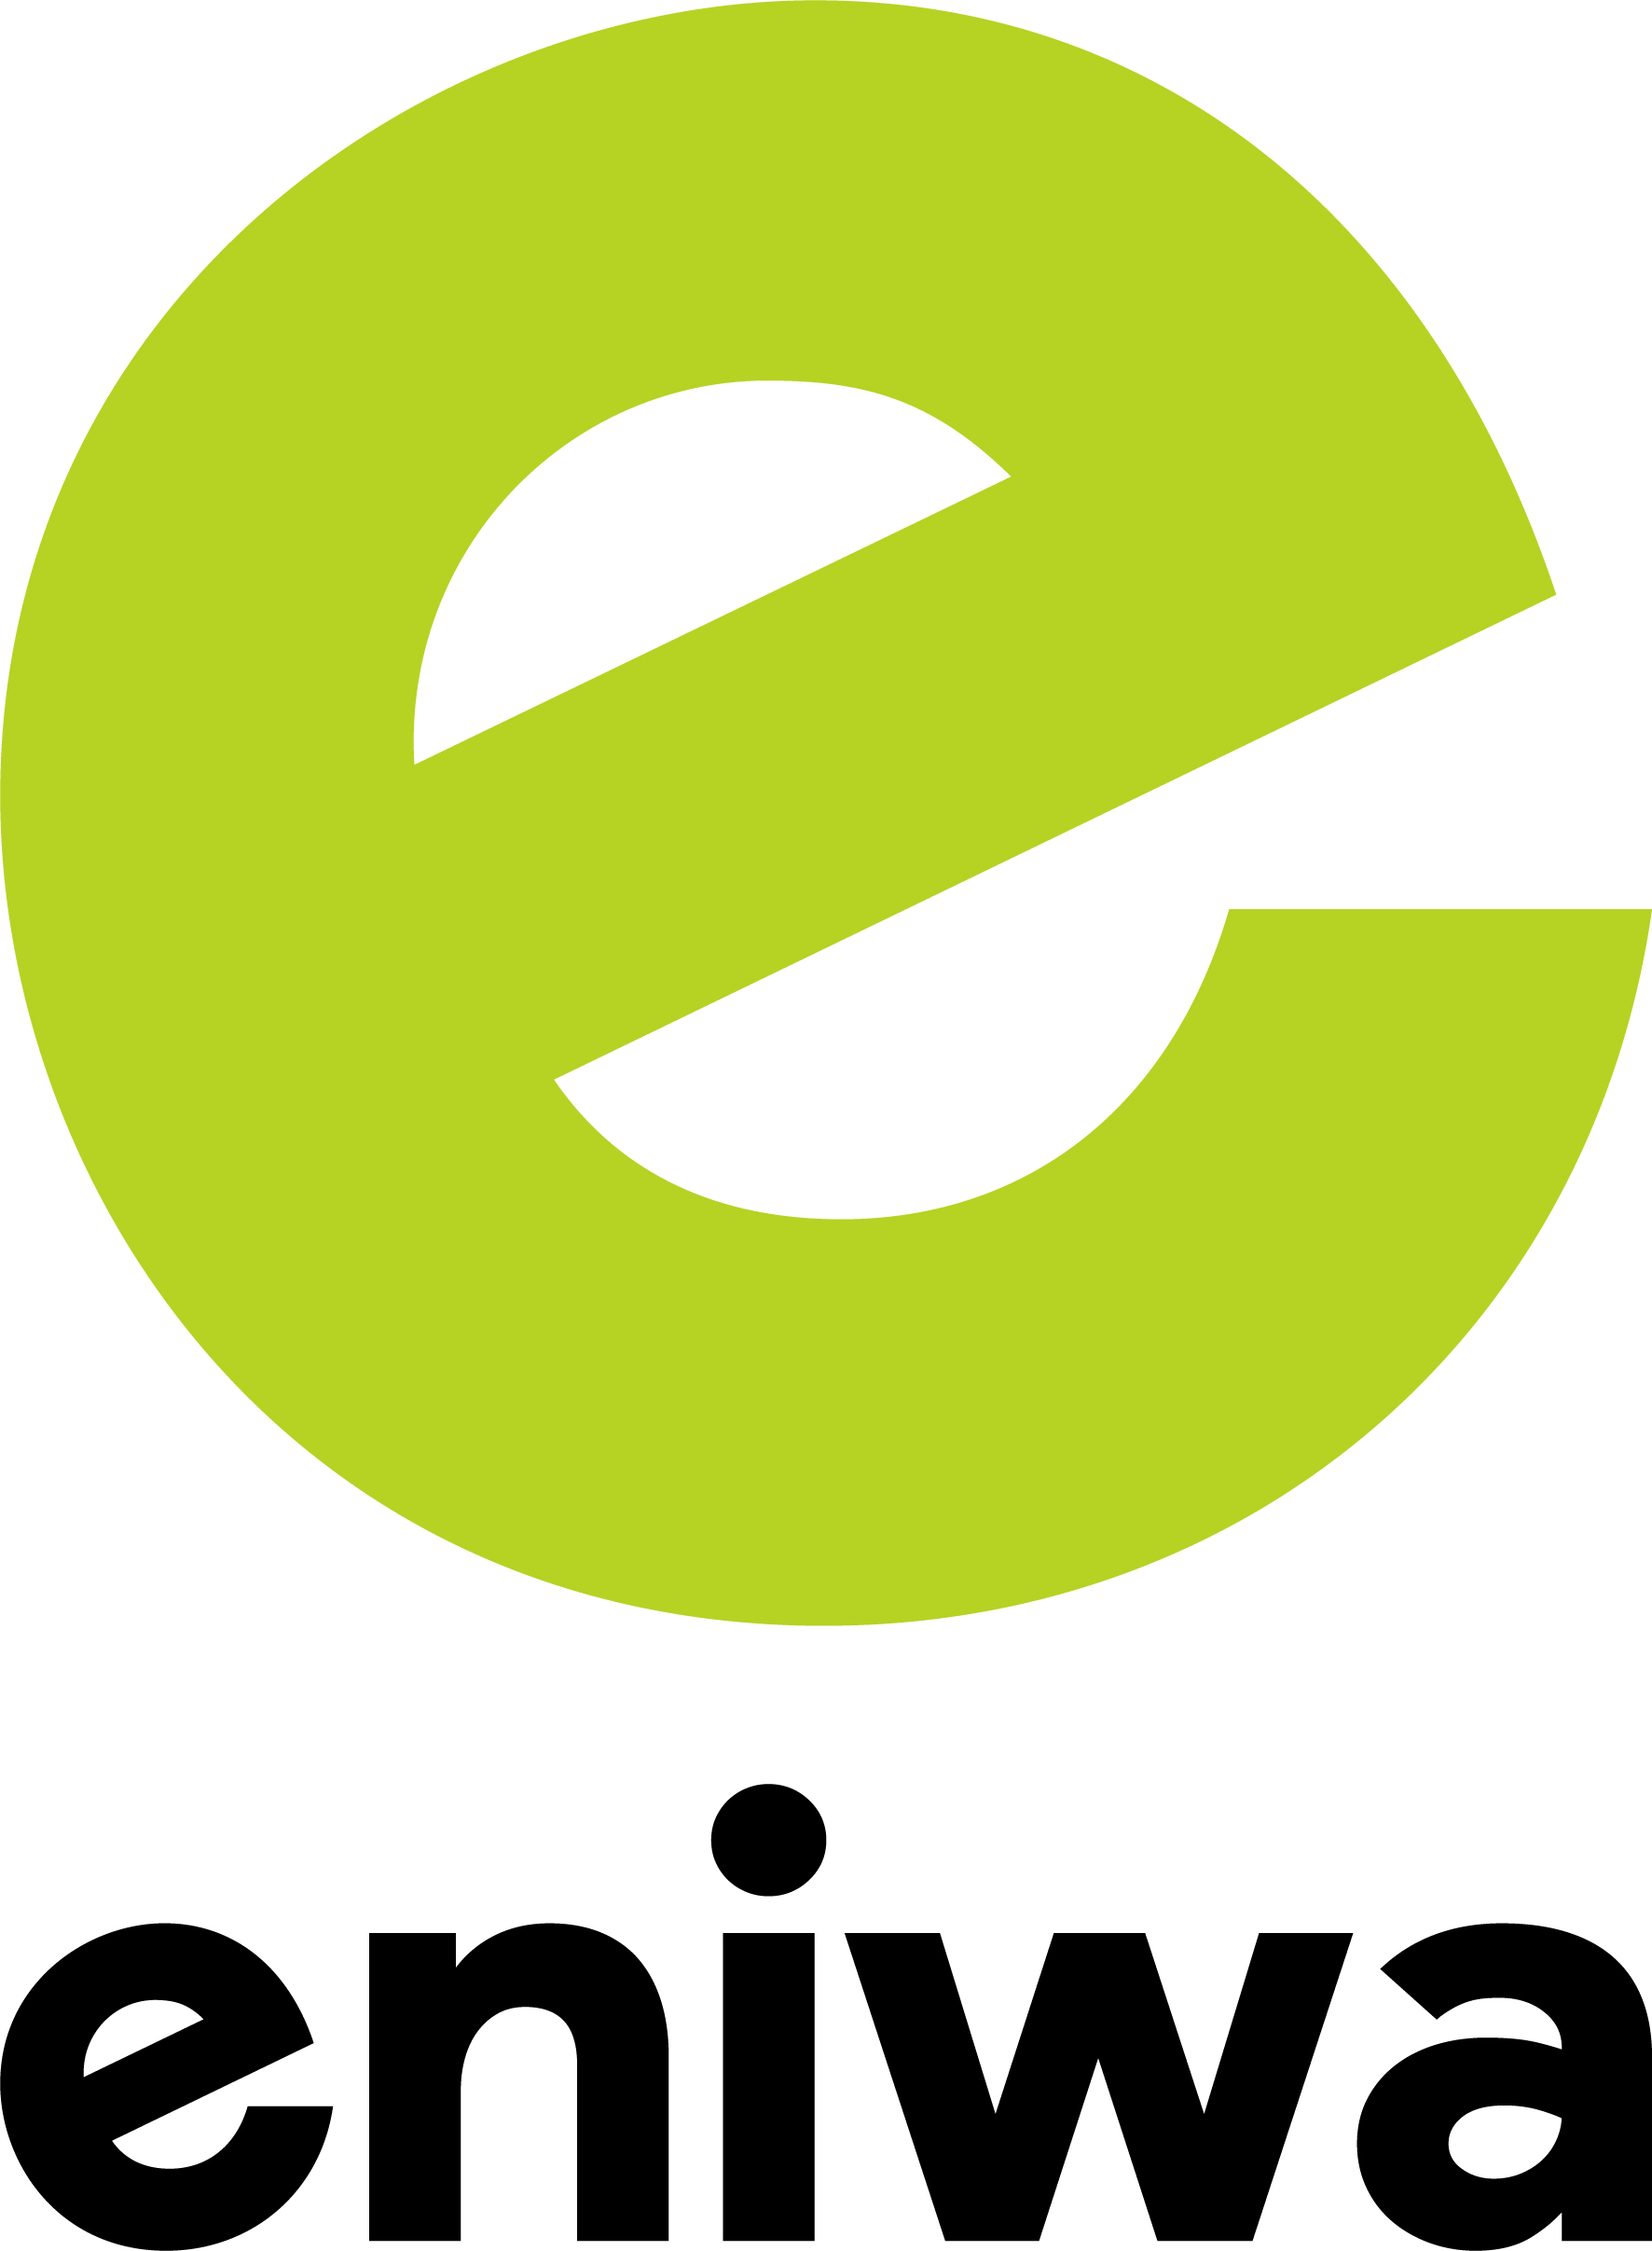 Logo Eniwa AG